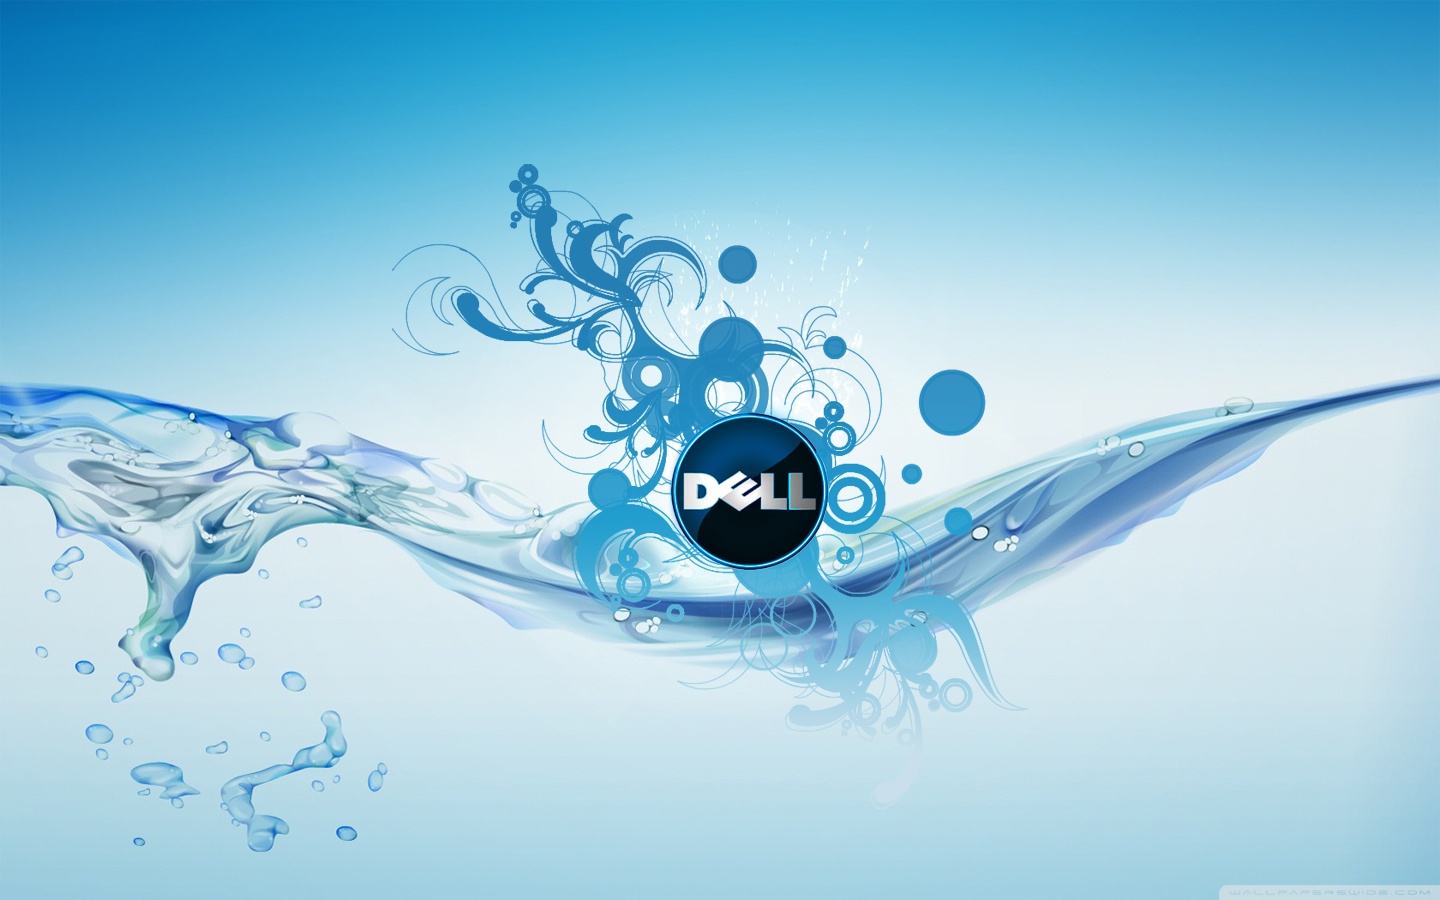 Dell Co Ultra HD Desktop Background Wallpaper For 4k UHD Tv